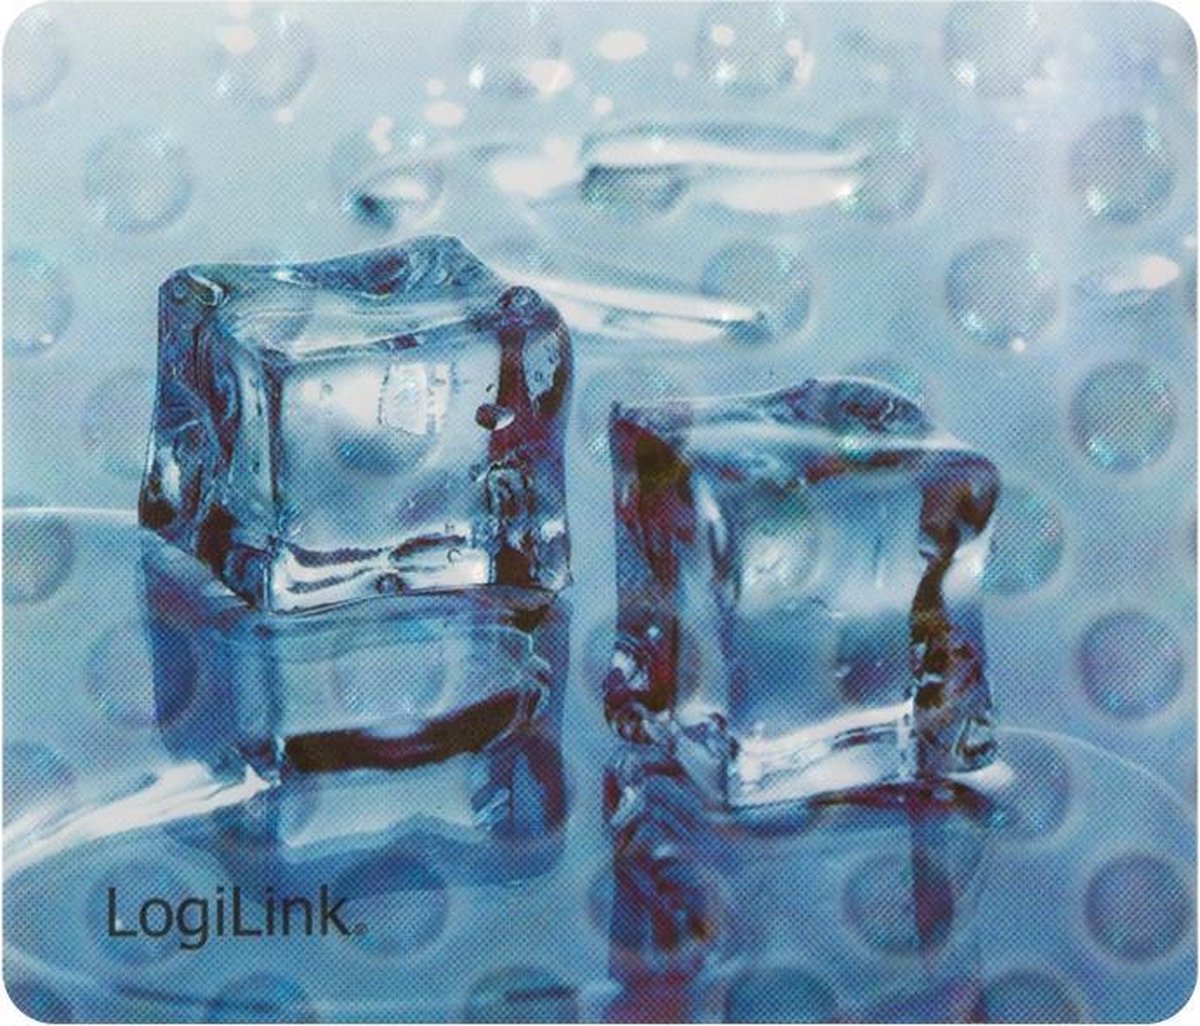 LogiLink ID0152 muismat - Blauw